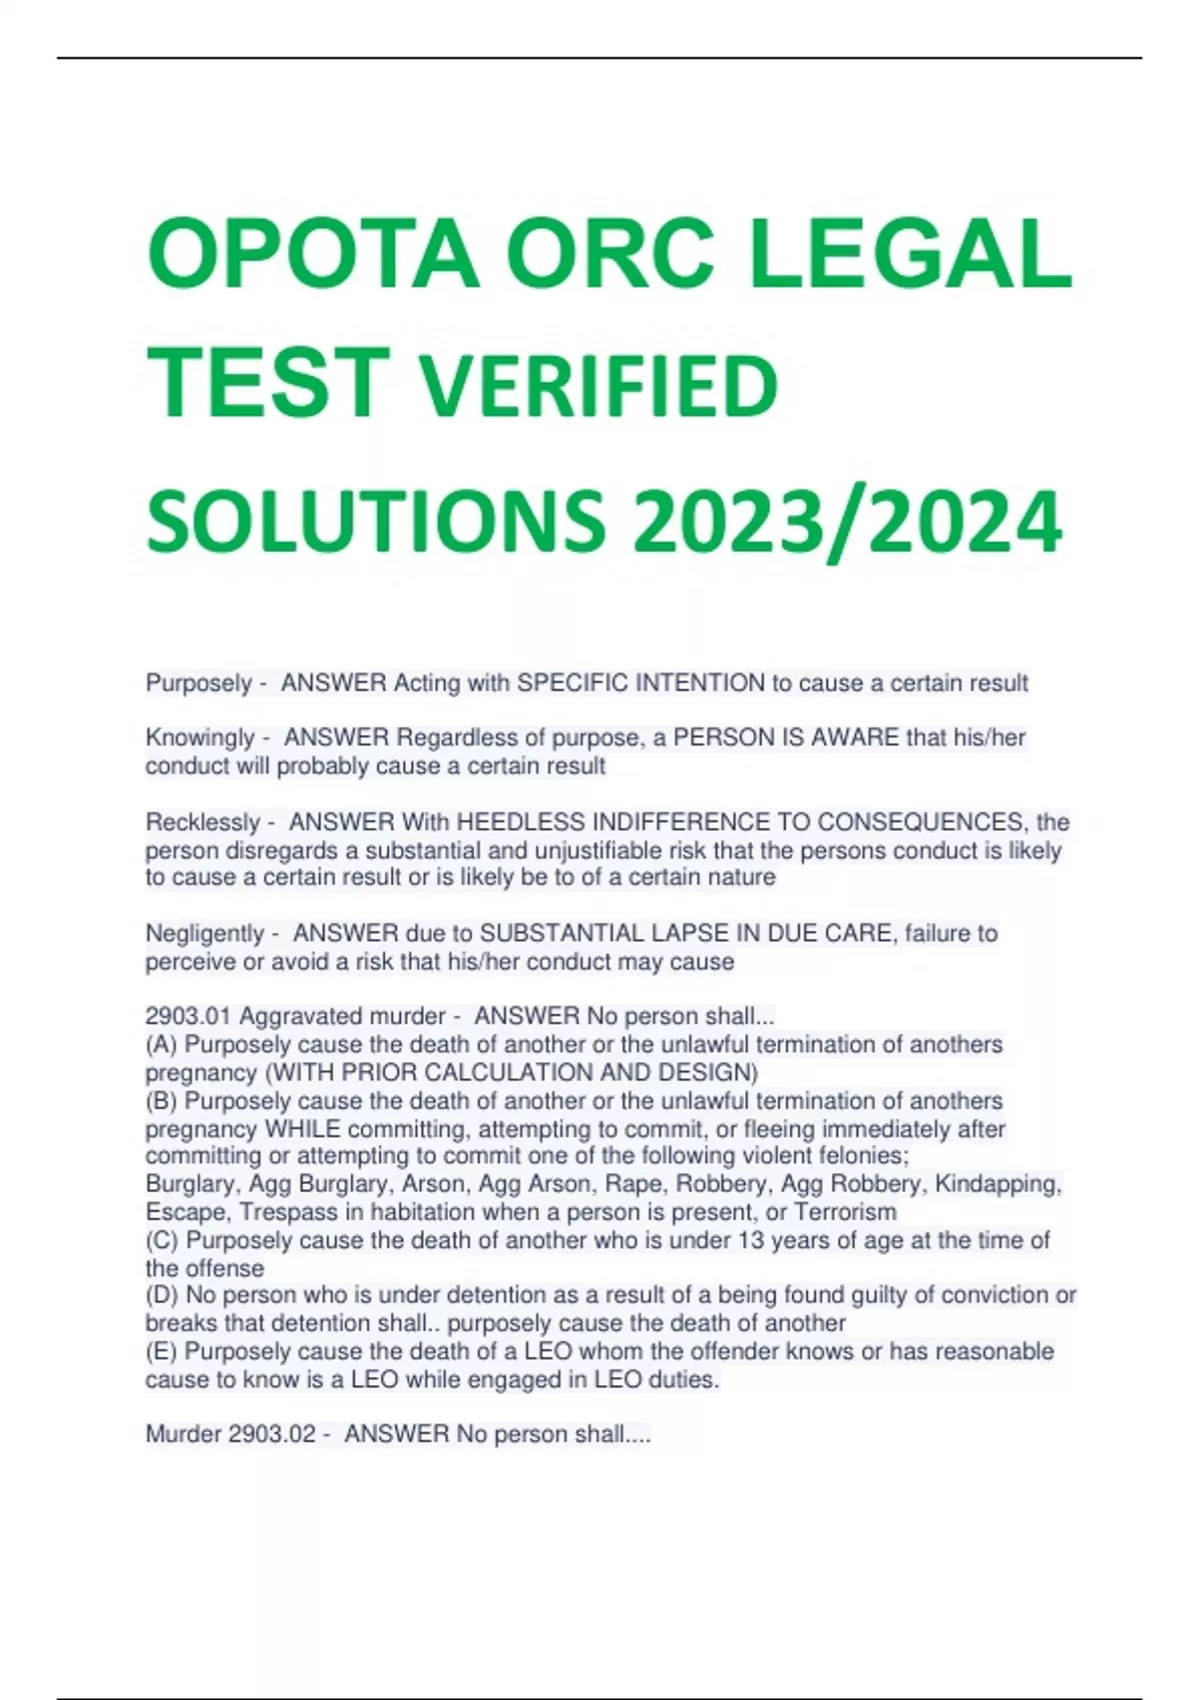 OPOTA ORC LEGAL TEST VERIFIED SOLUTIONS 2023/2024 OPOTA ORC LEGAL